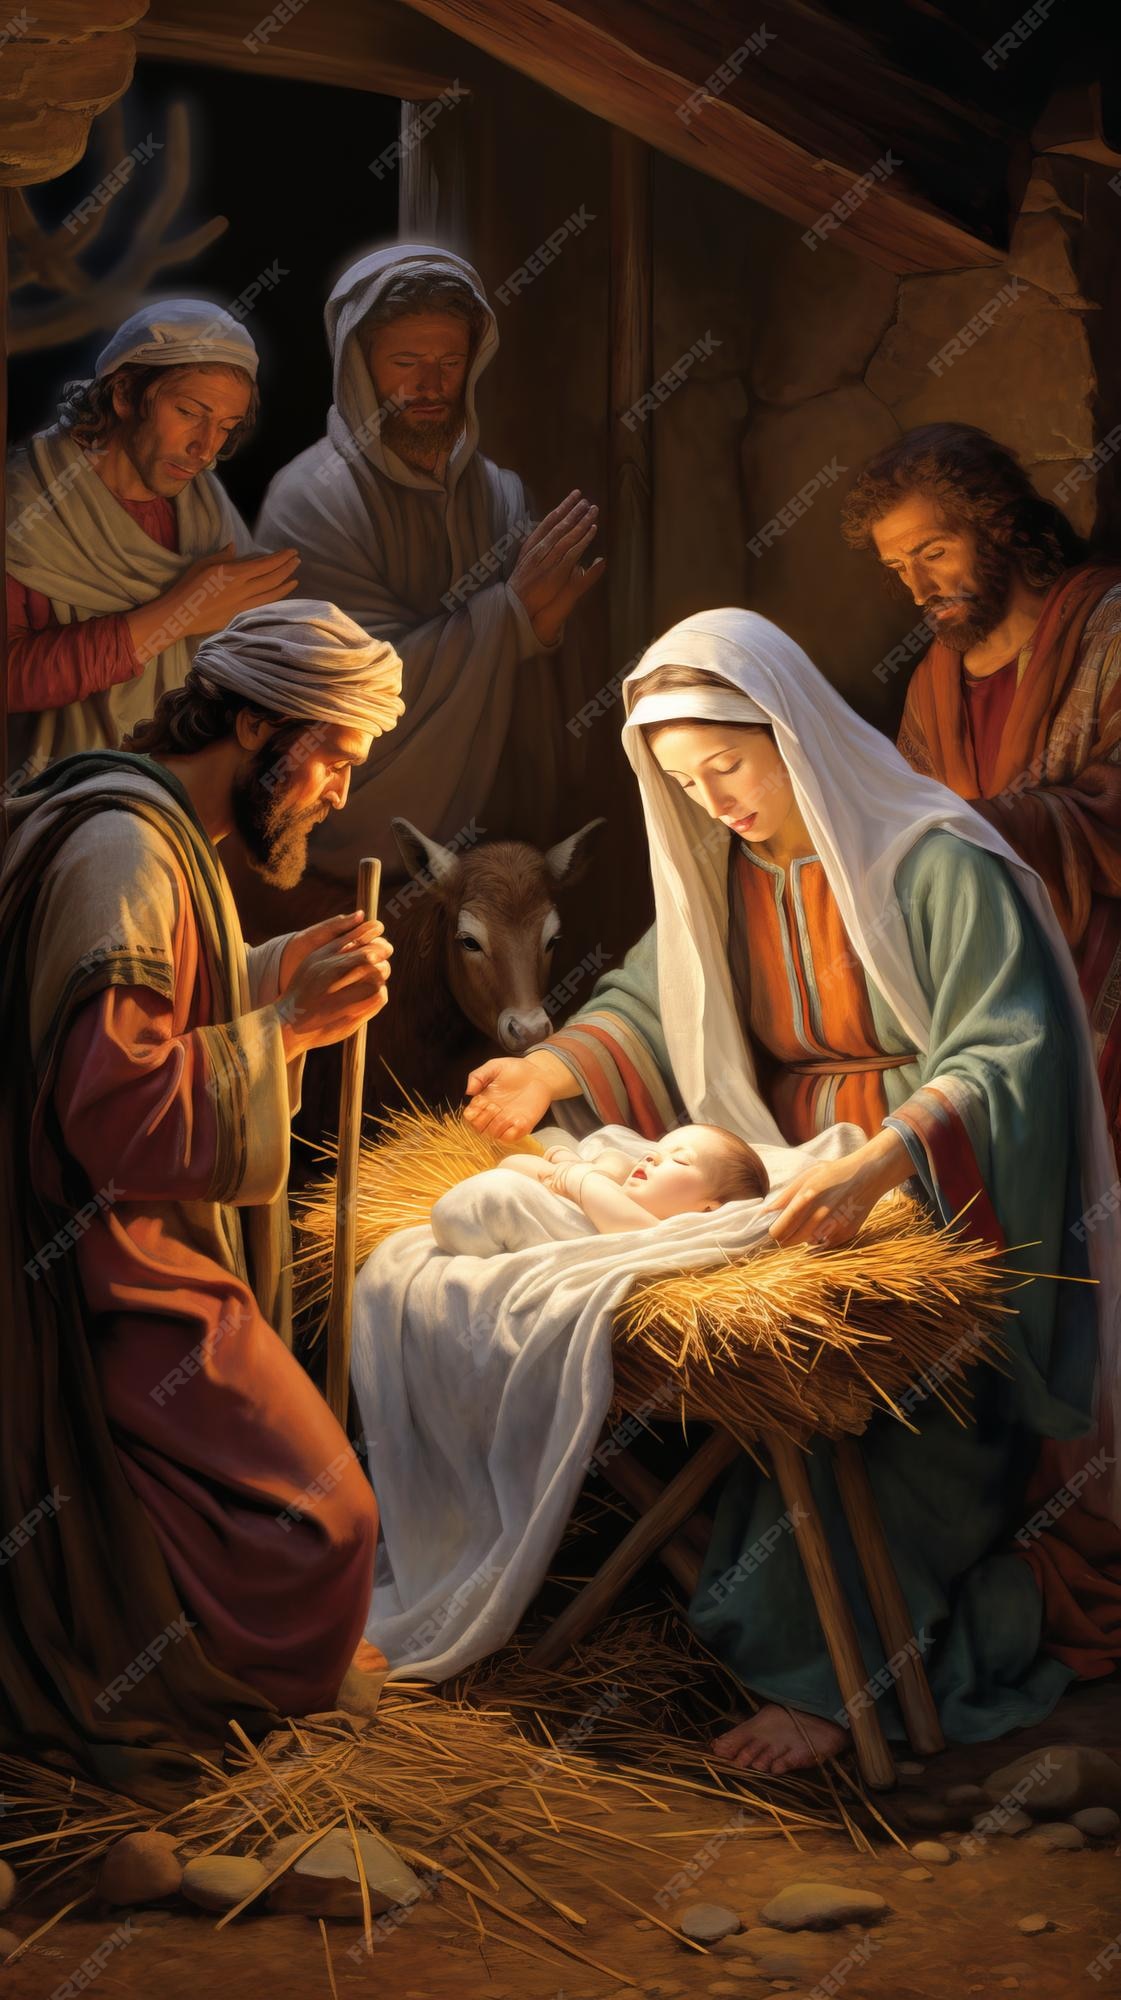 Premium Photo | Nativity Scene Celebrating the Birth of Jesus